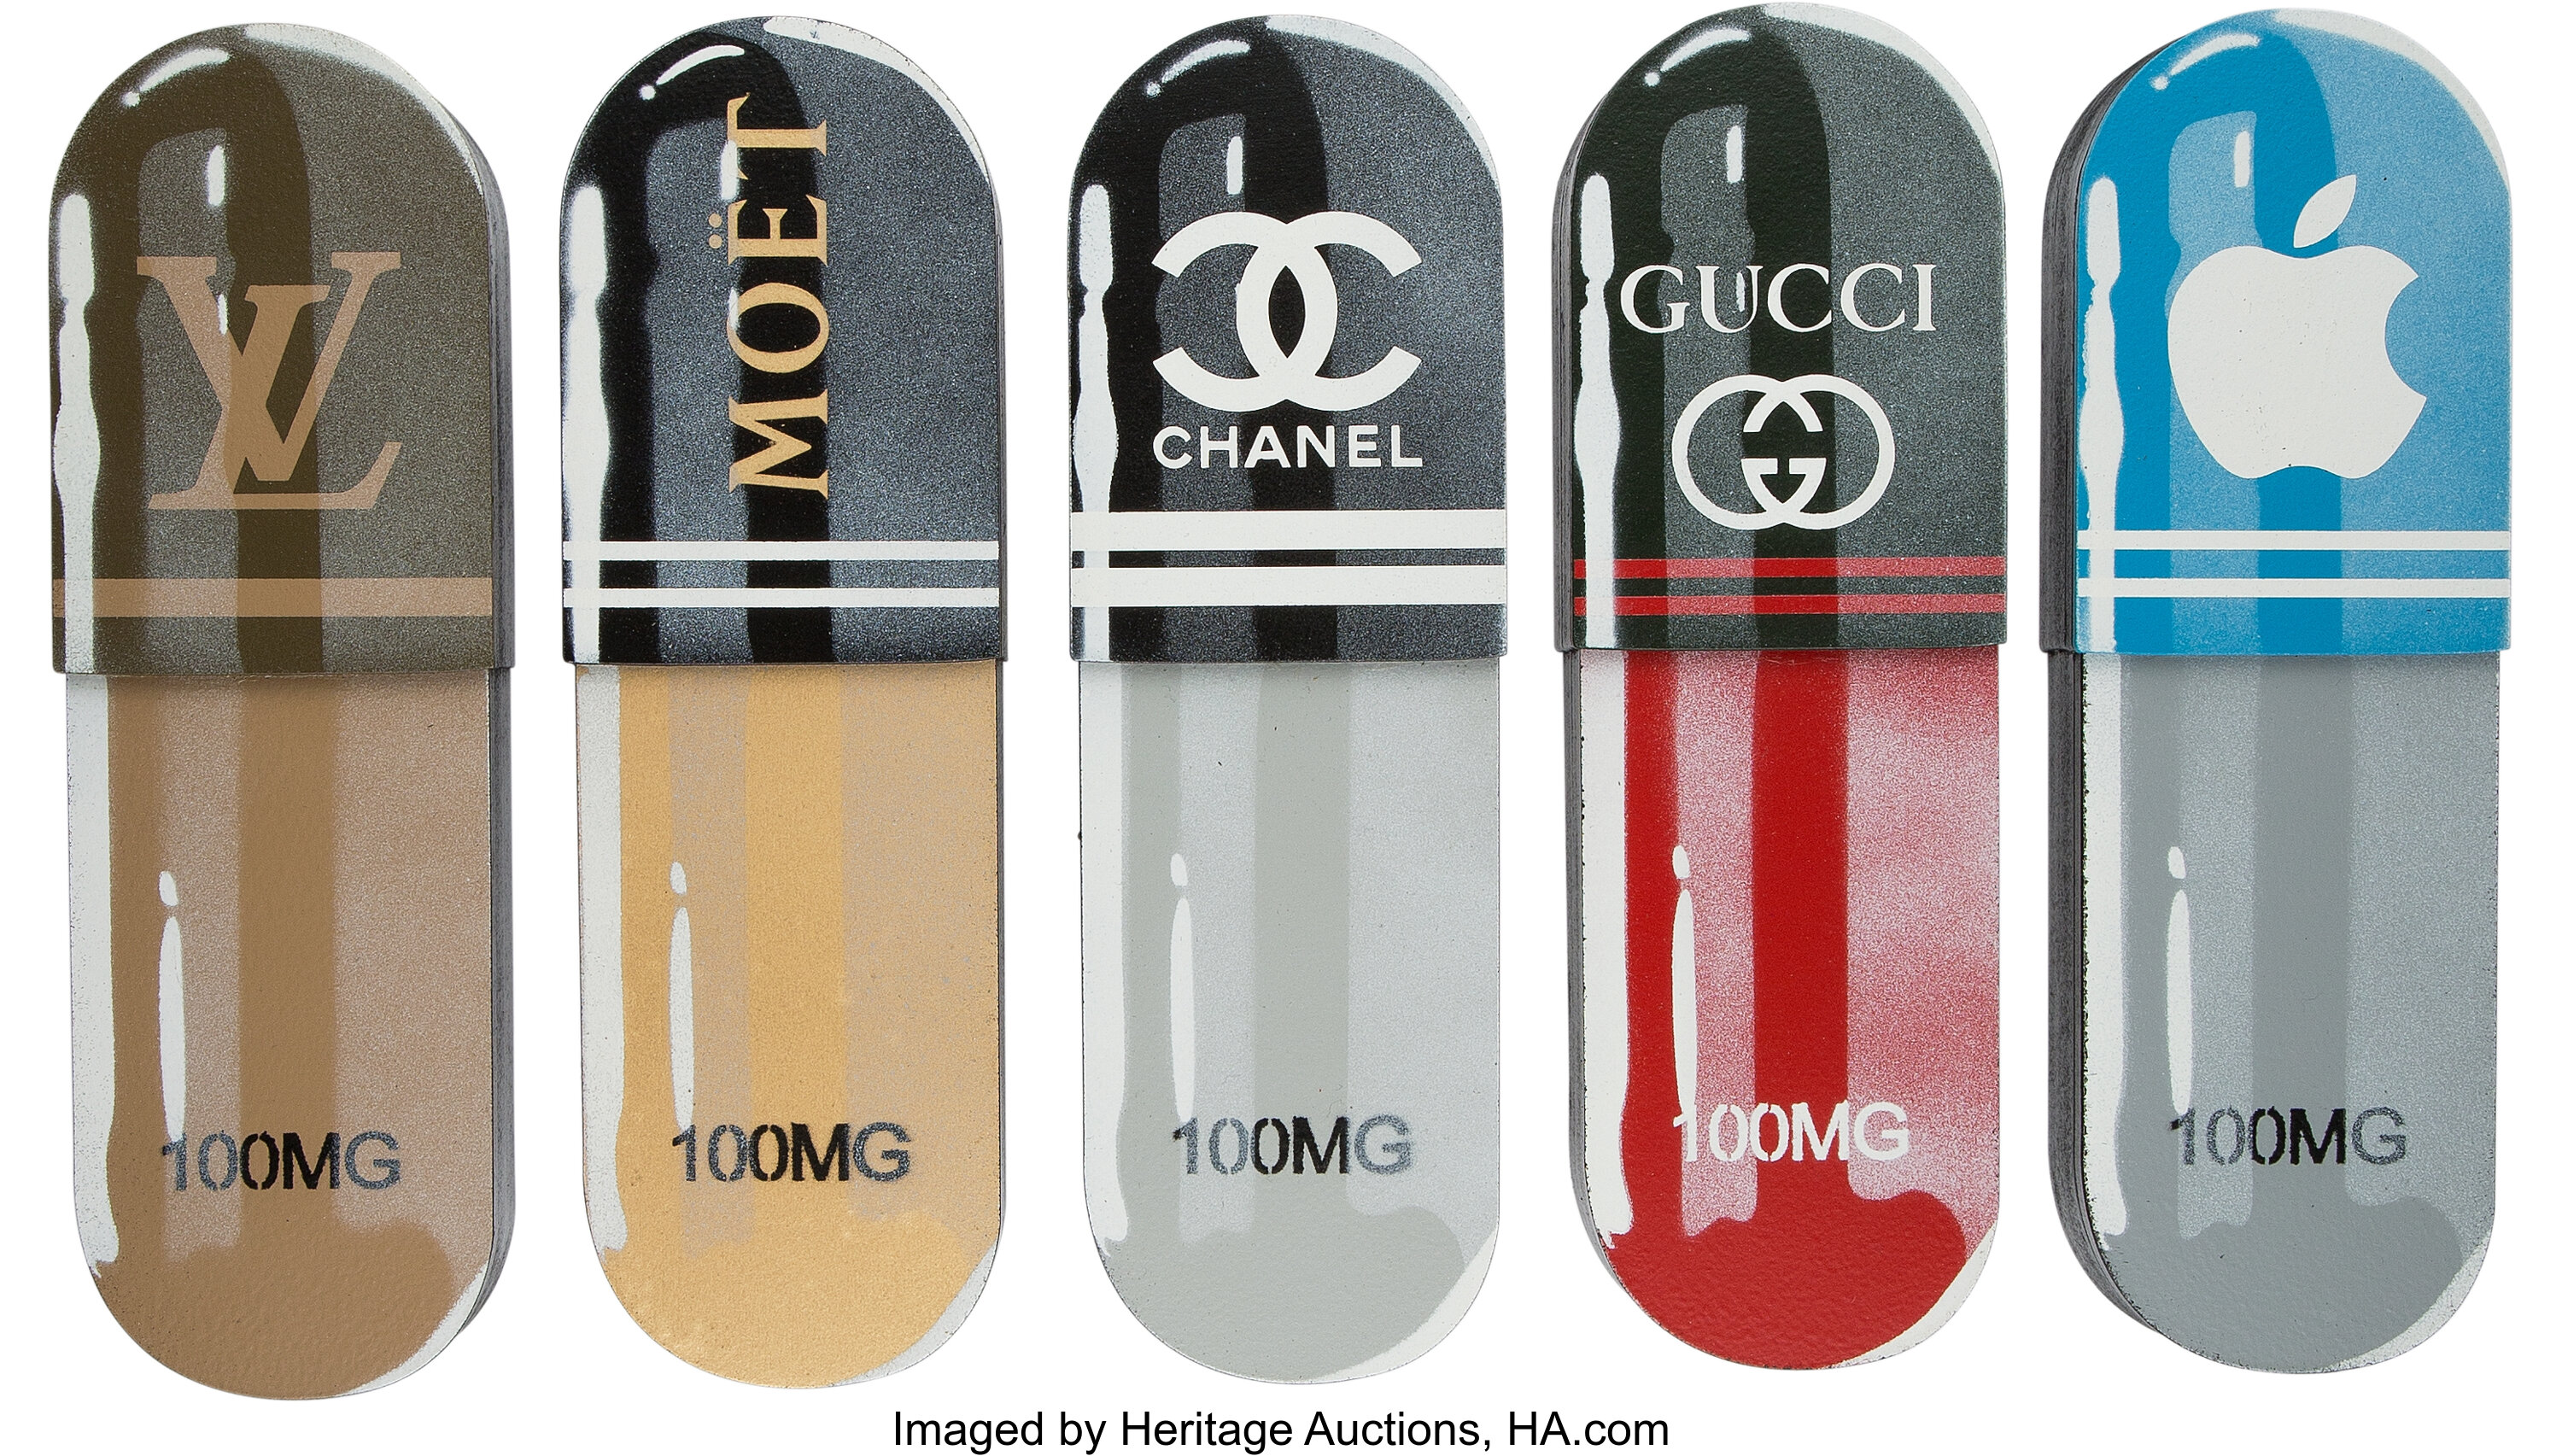 Louis Vuitton Designer Drugs PP Skateboard Art Deck by Denial- Daniel –  Sprayed Paint Art Collection